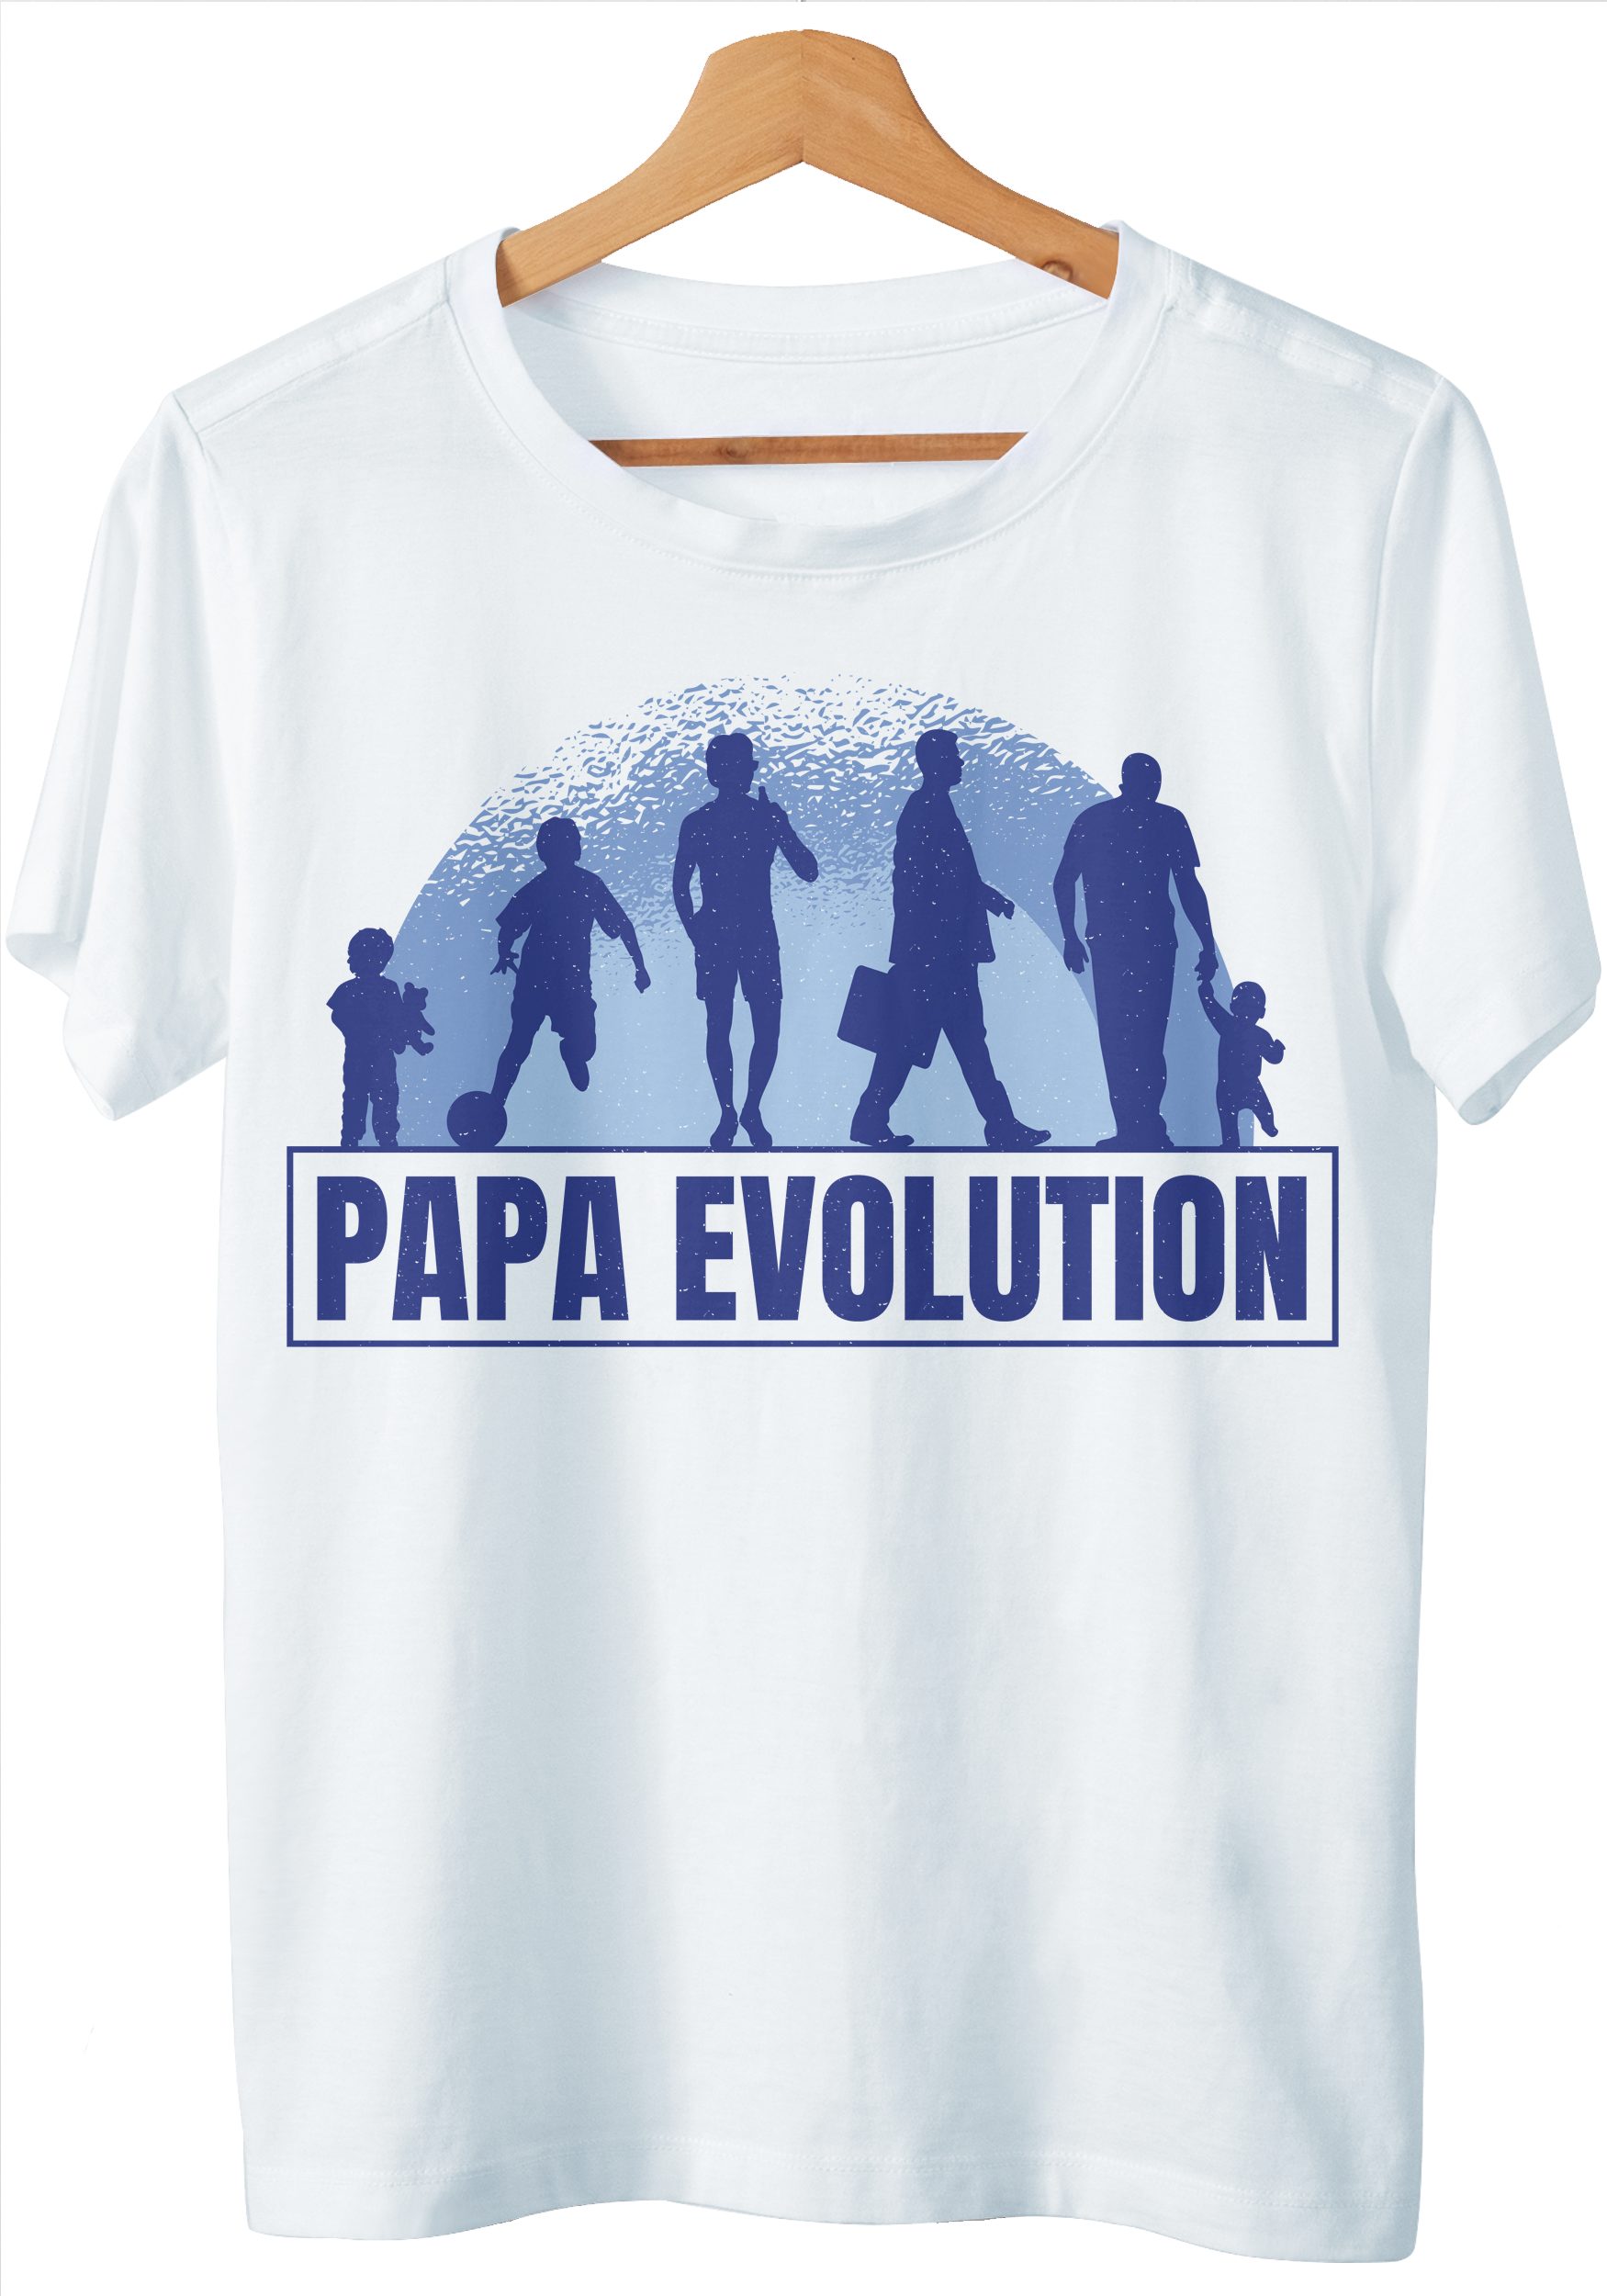 & Papa Evo Weiß Vater Dad zum Shirt Art Evolution Detail Geschenk Vatertag T-Shirt Papa